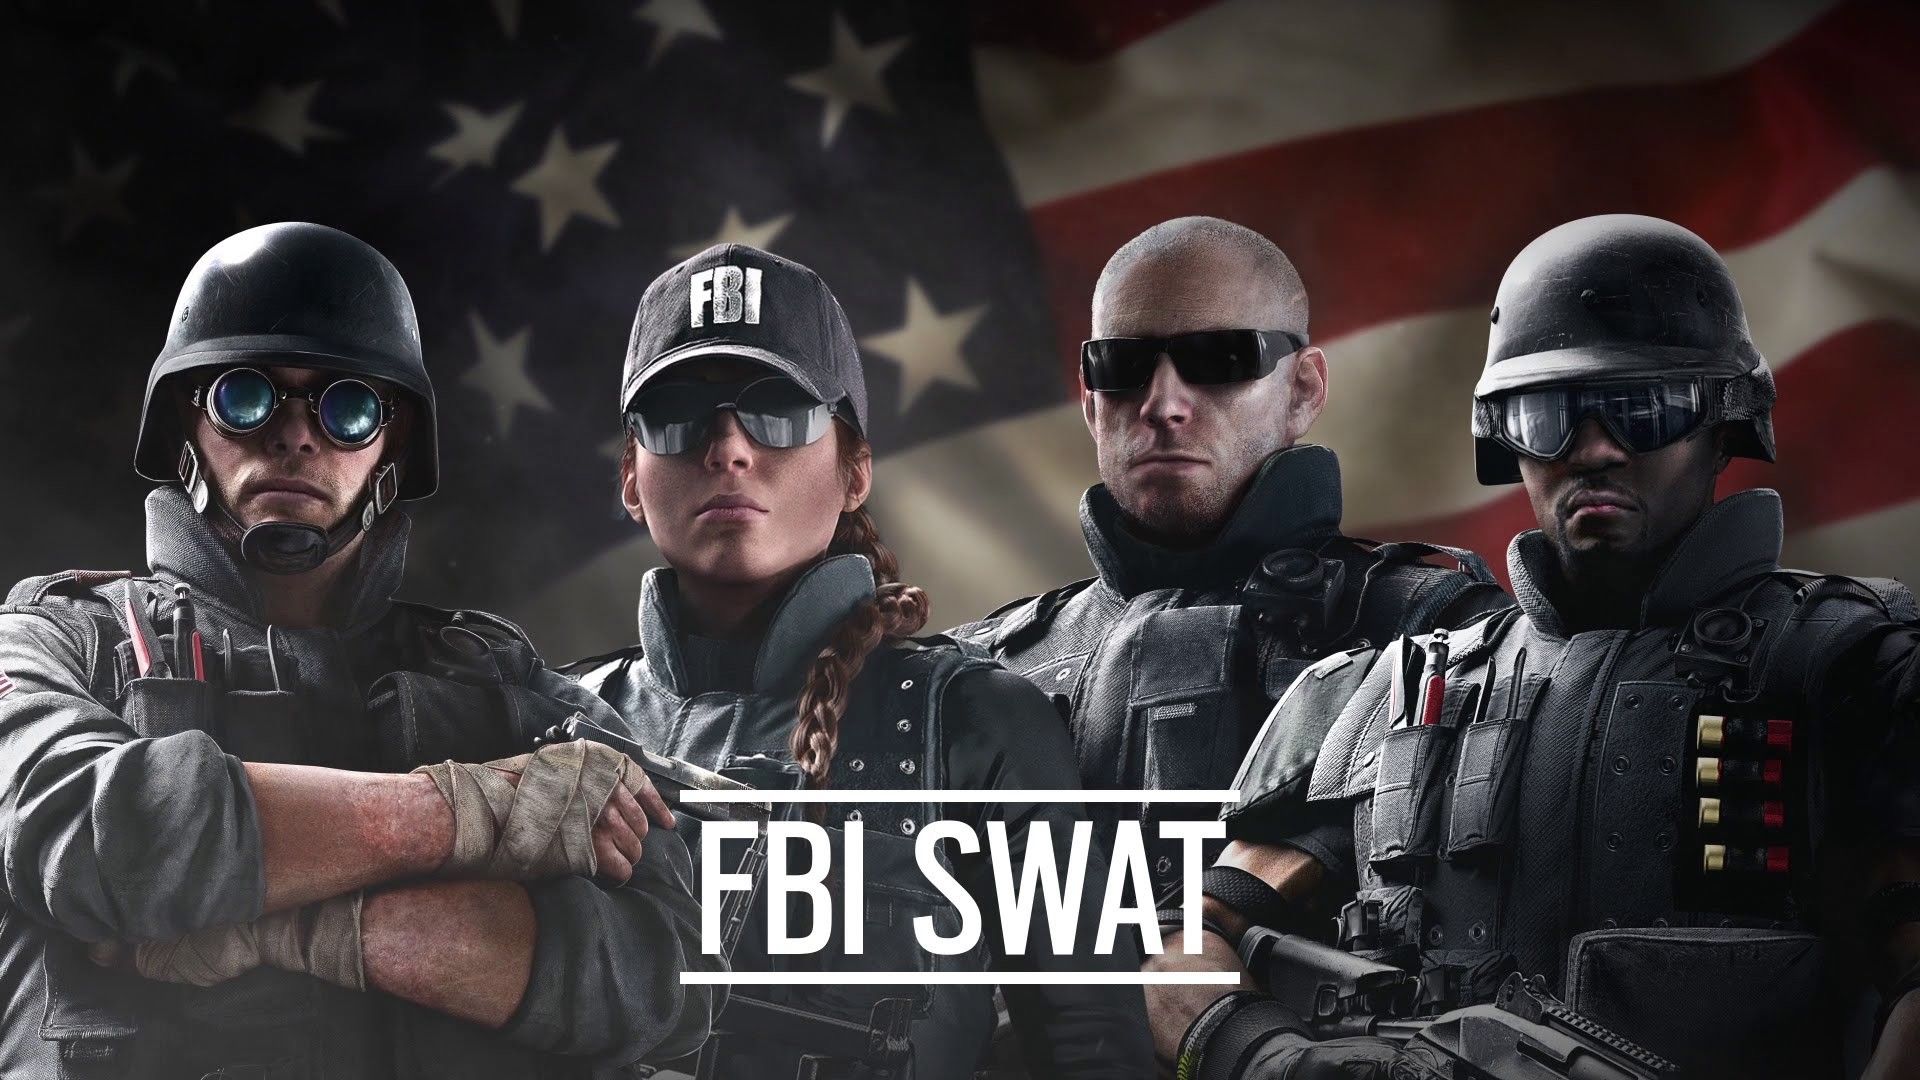 Swat Team Wallpaper